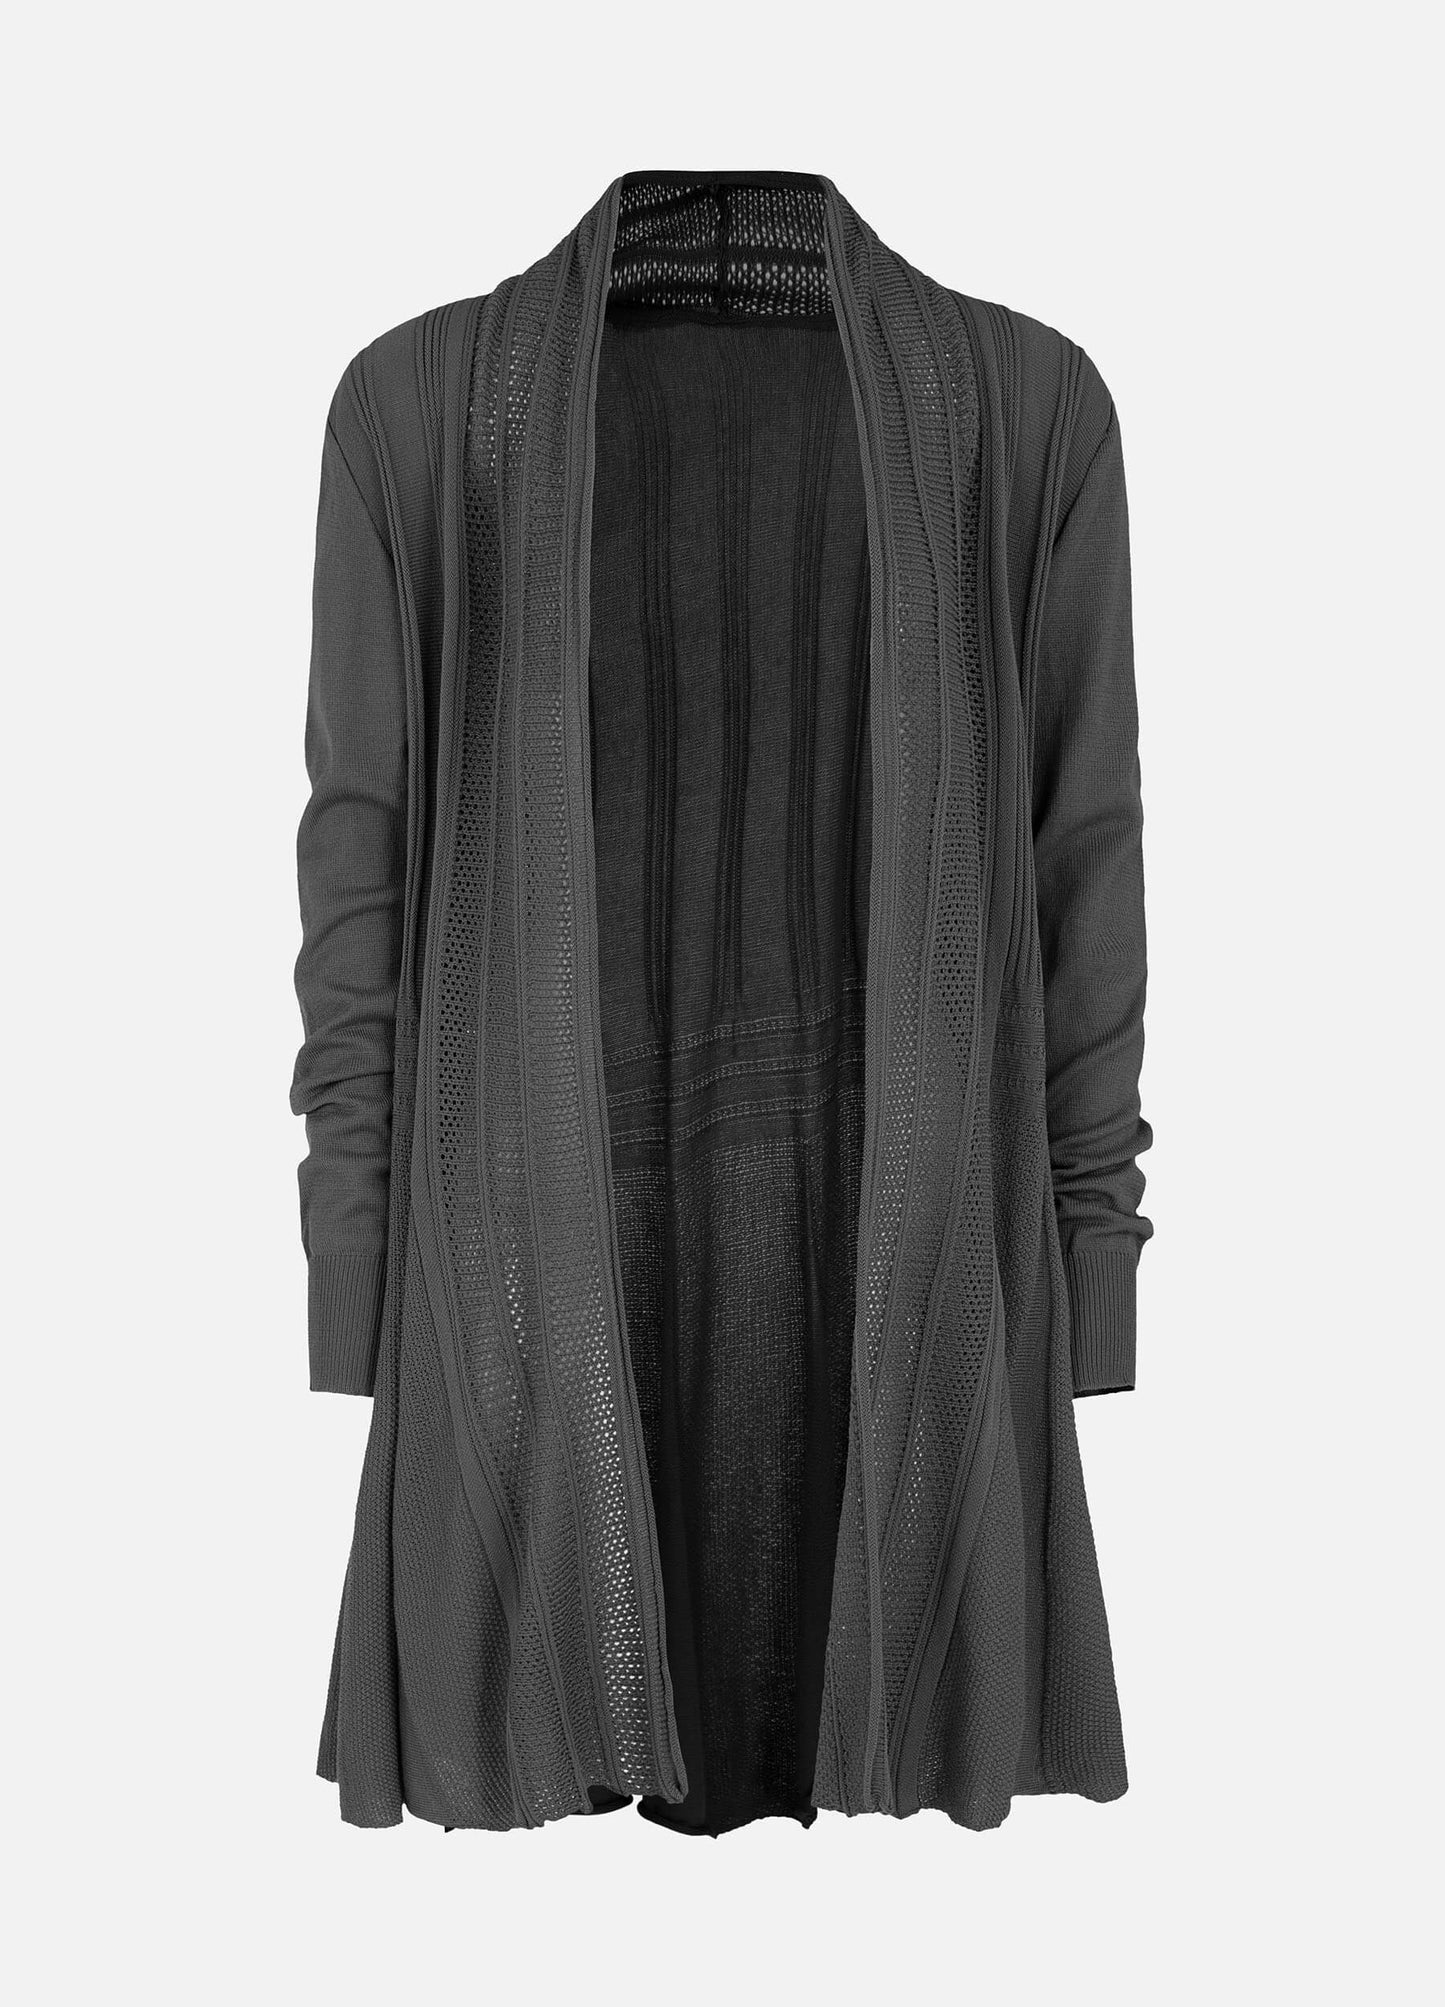 MECALA Women's Long Sleeve Black Cardigan